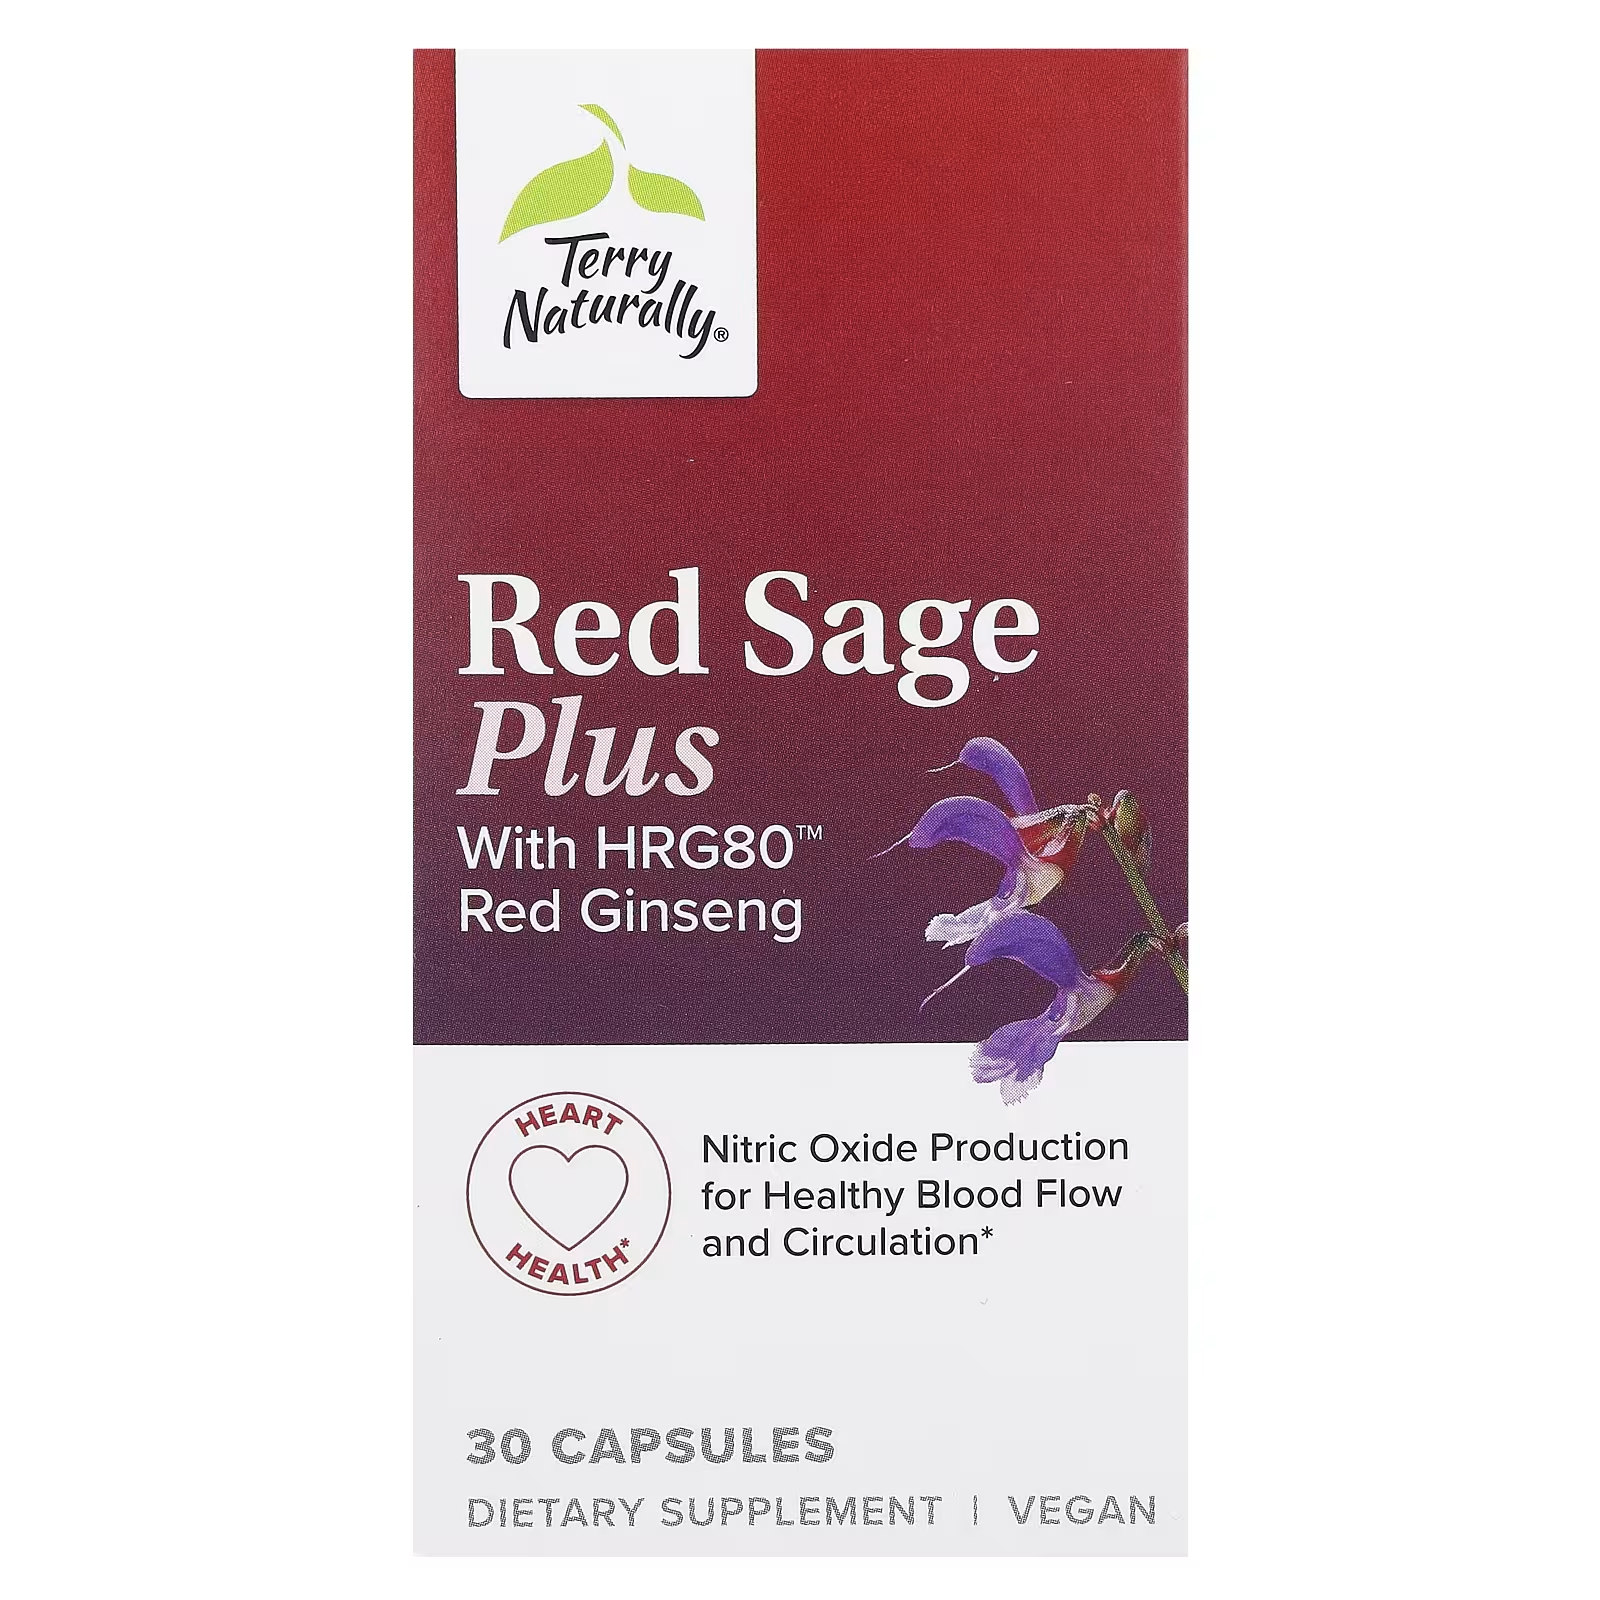 Пищевая добавка Terry Naturally Red Sage Plus HRG80 с красным женьшенем, 30 капсул пищевая добавка terry naturally red sage plus hrg80 с красным женьшенем 30 капсул